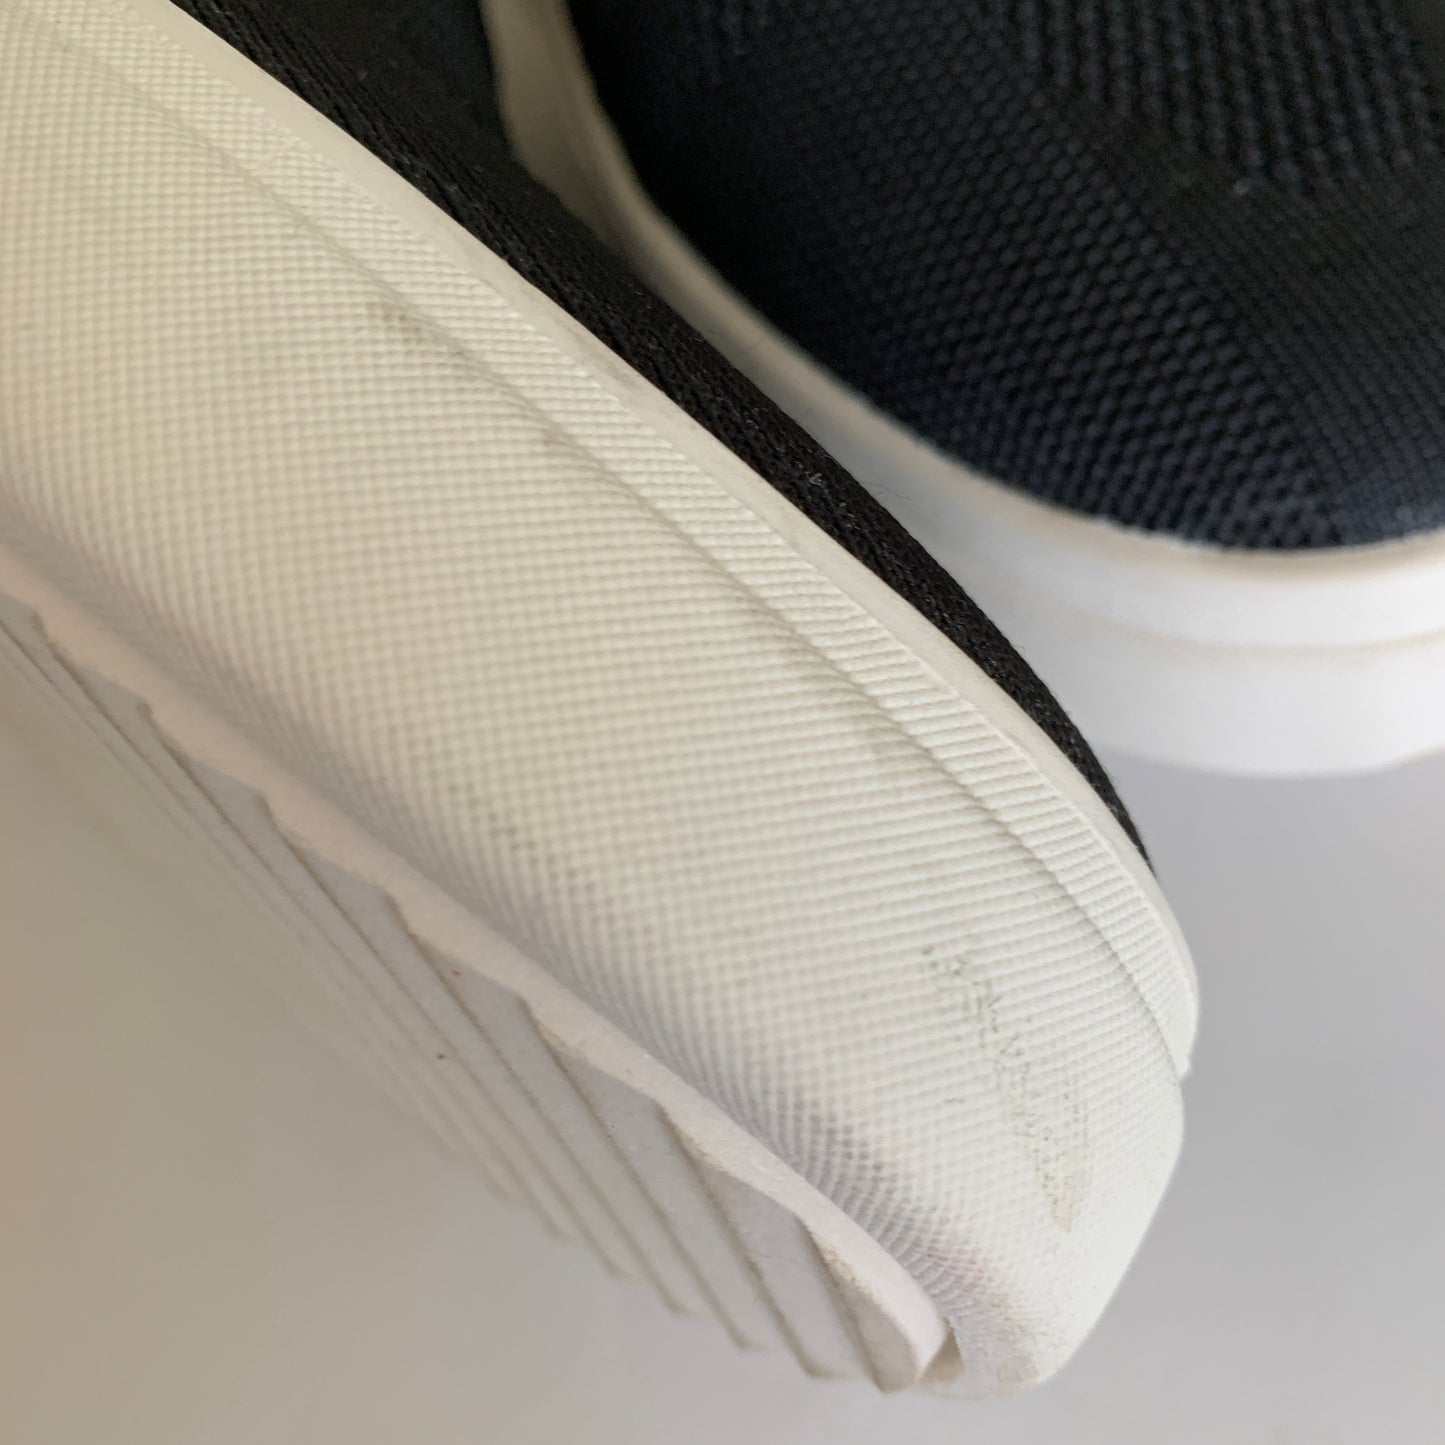 A New Day Black Carina Slip On Stretch Sneaker 7.5